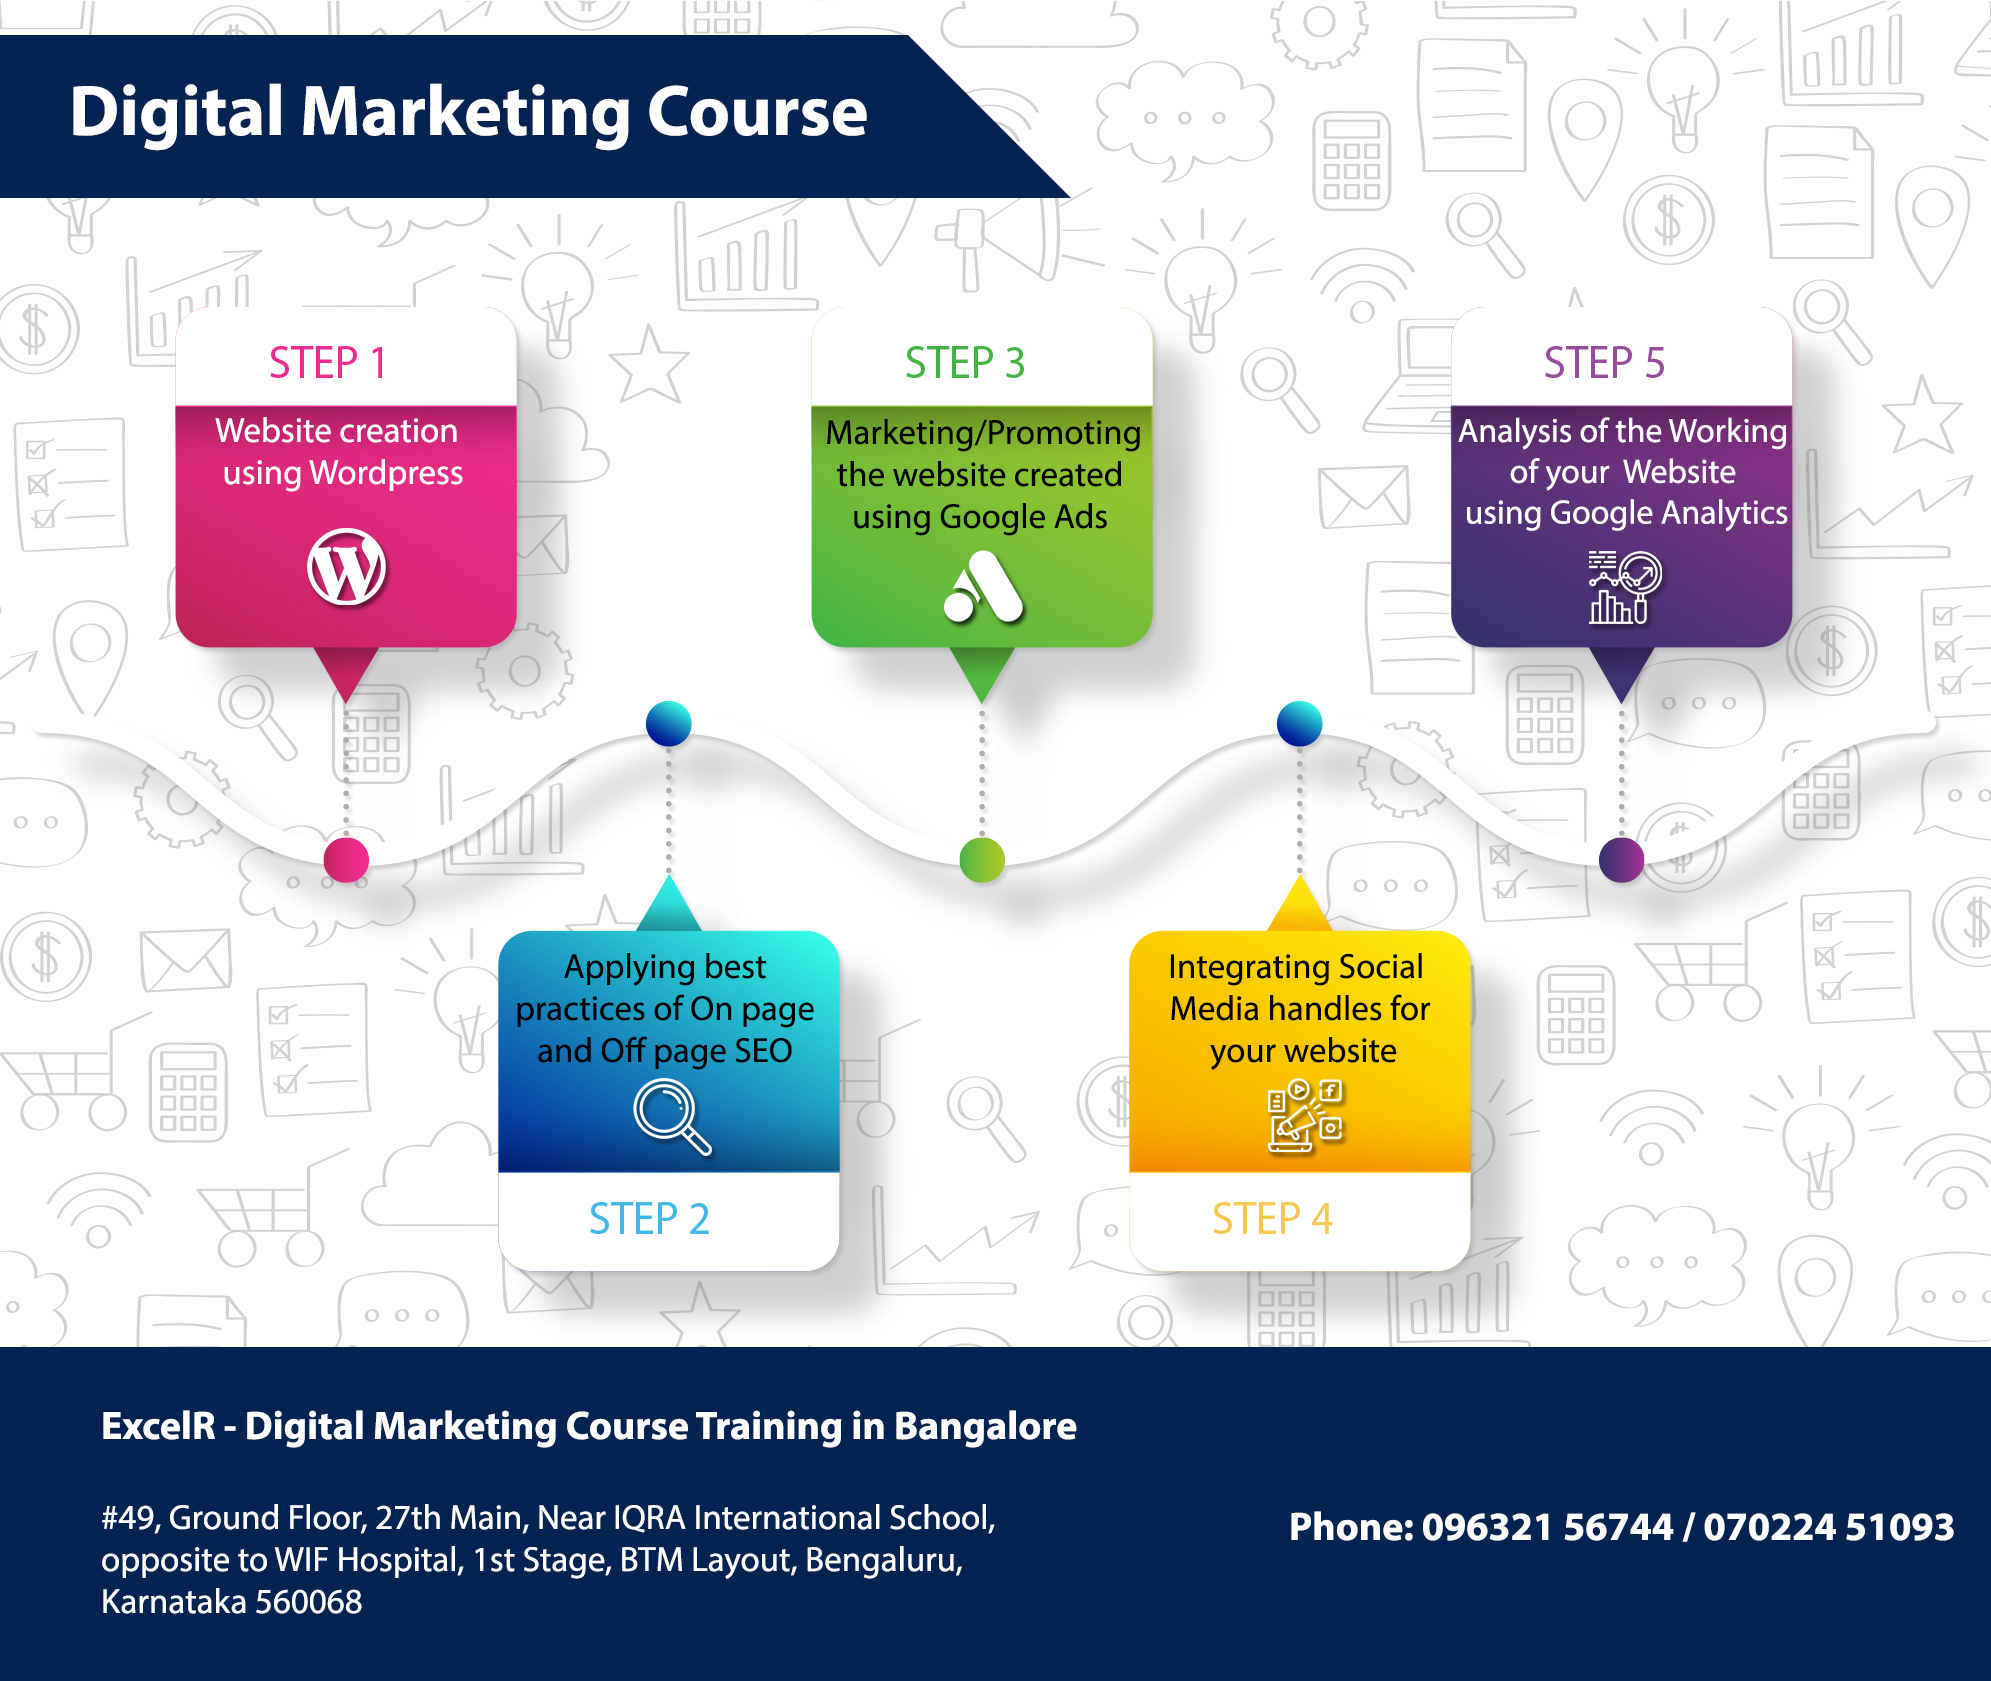 Digital Marketing Course  Bangalore.jpg  by bavisthra